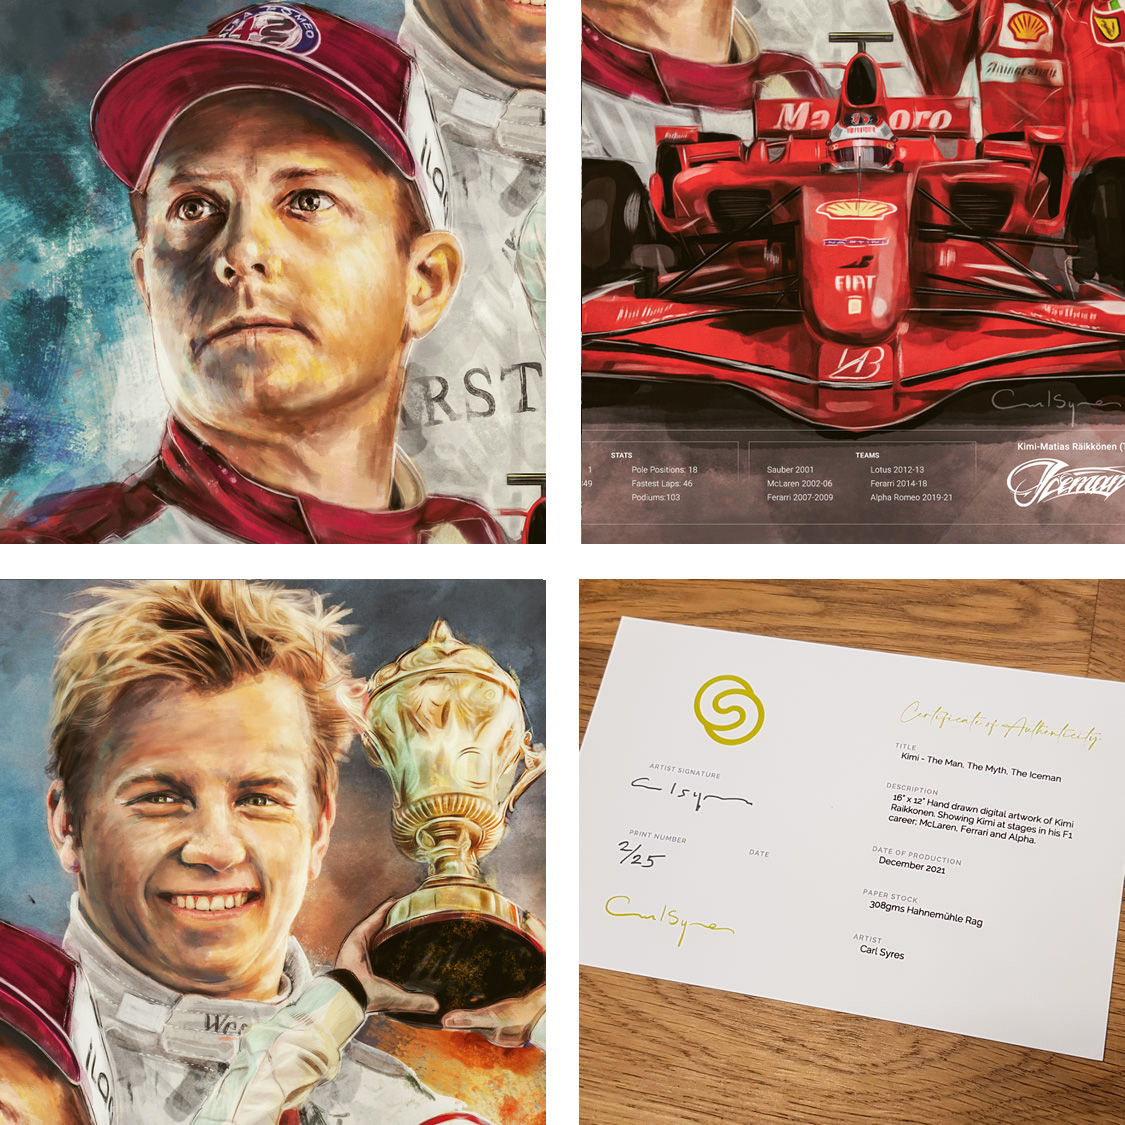 Kimi Raikkonen 'The Ice Man' F1 Driver Prints